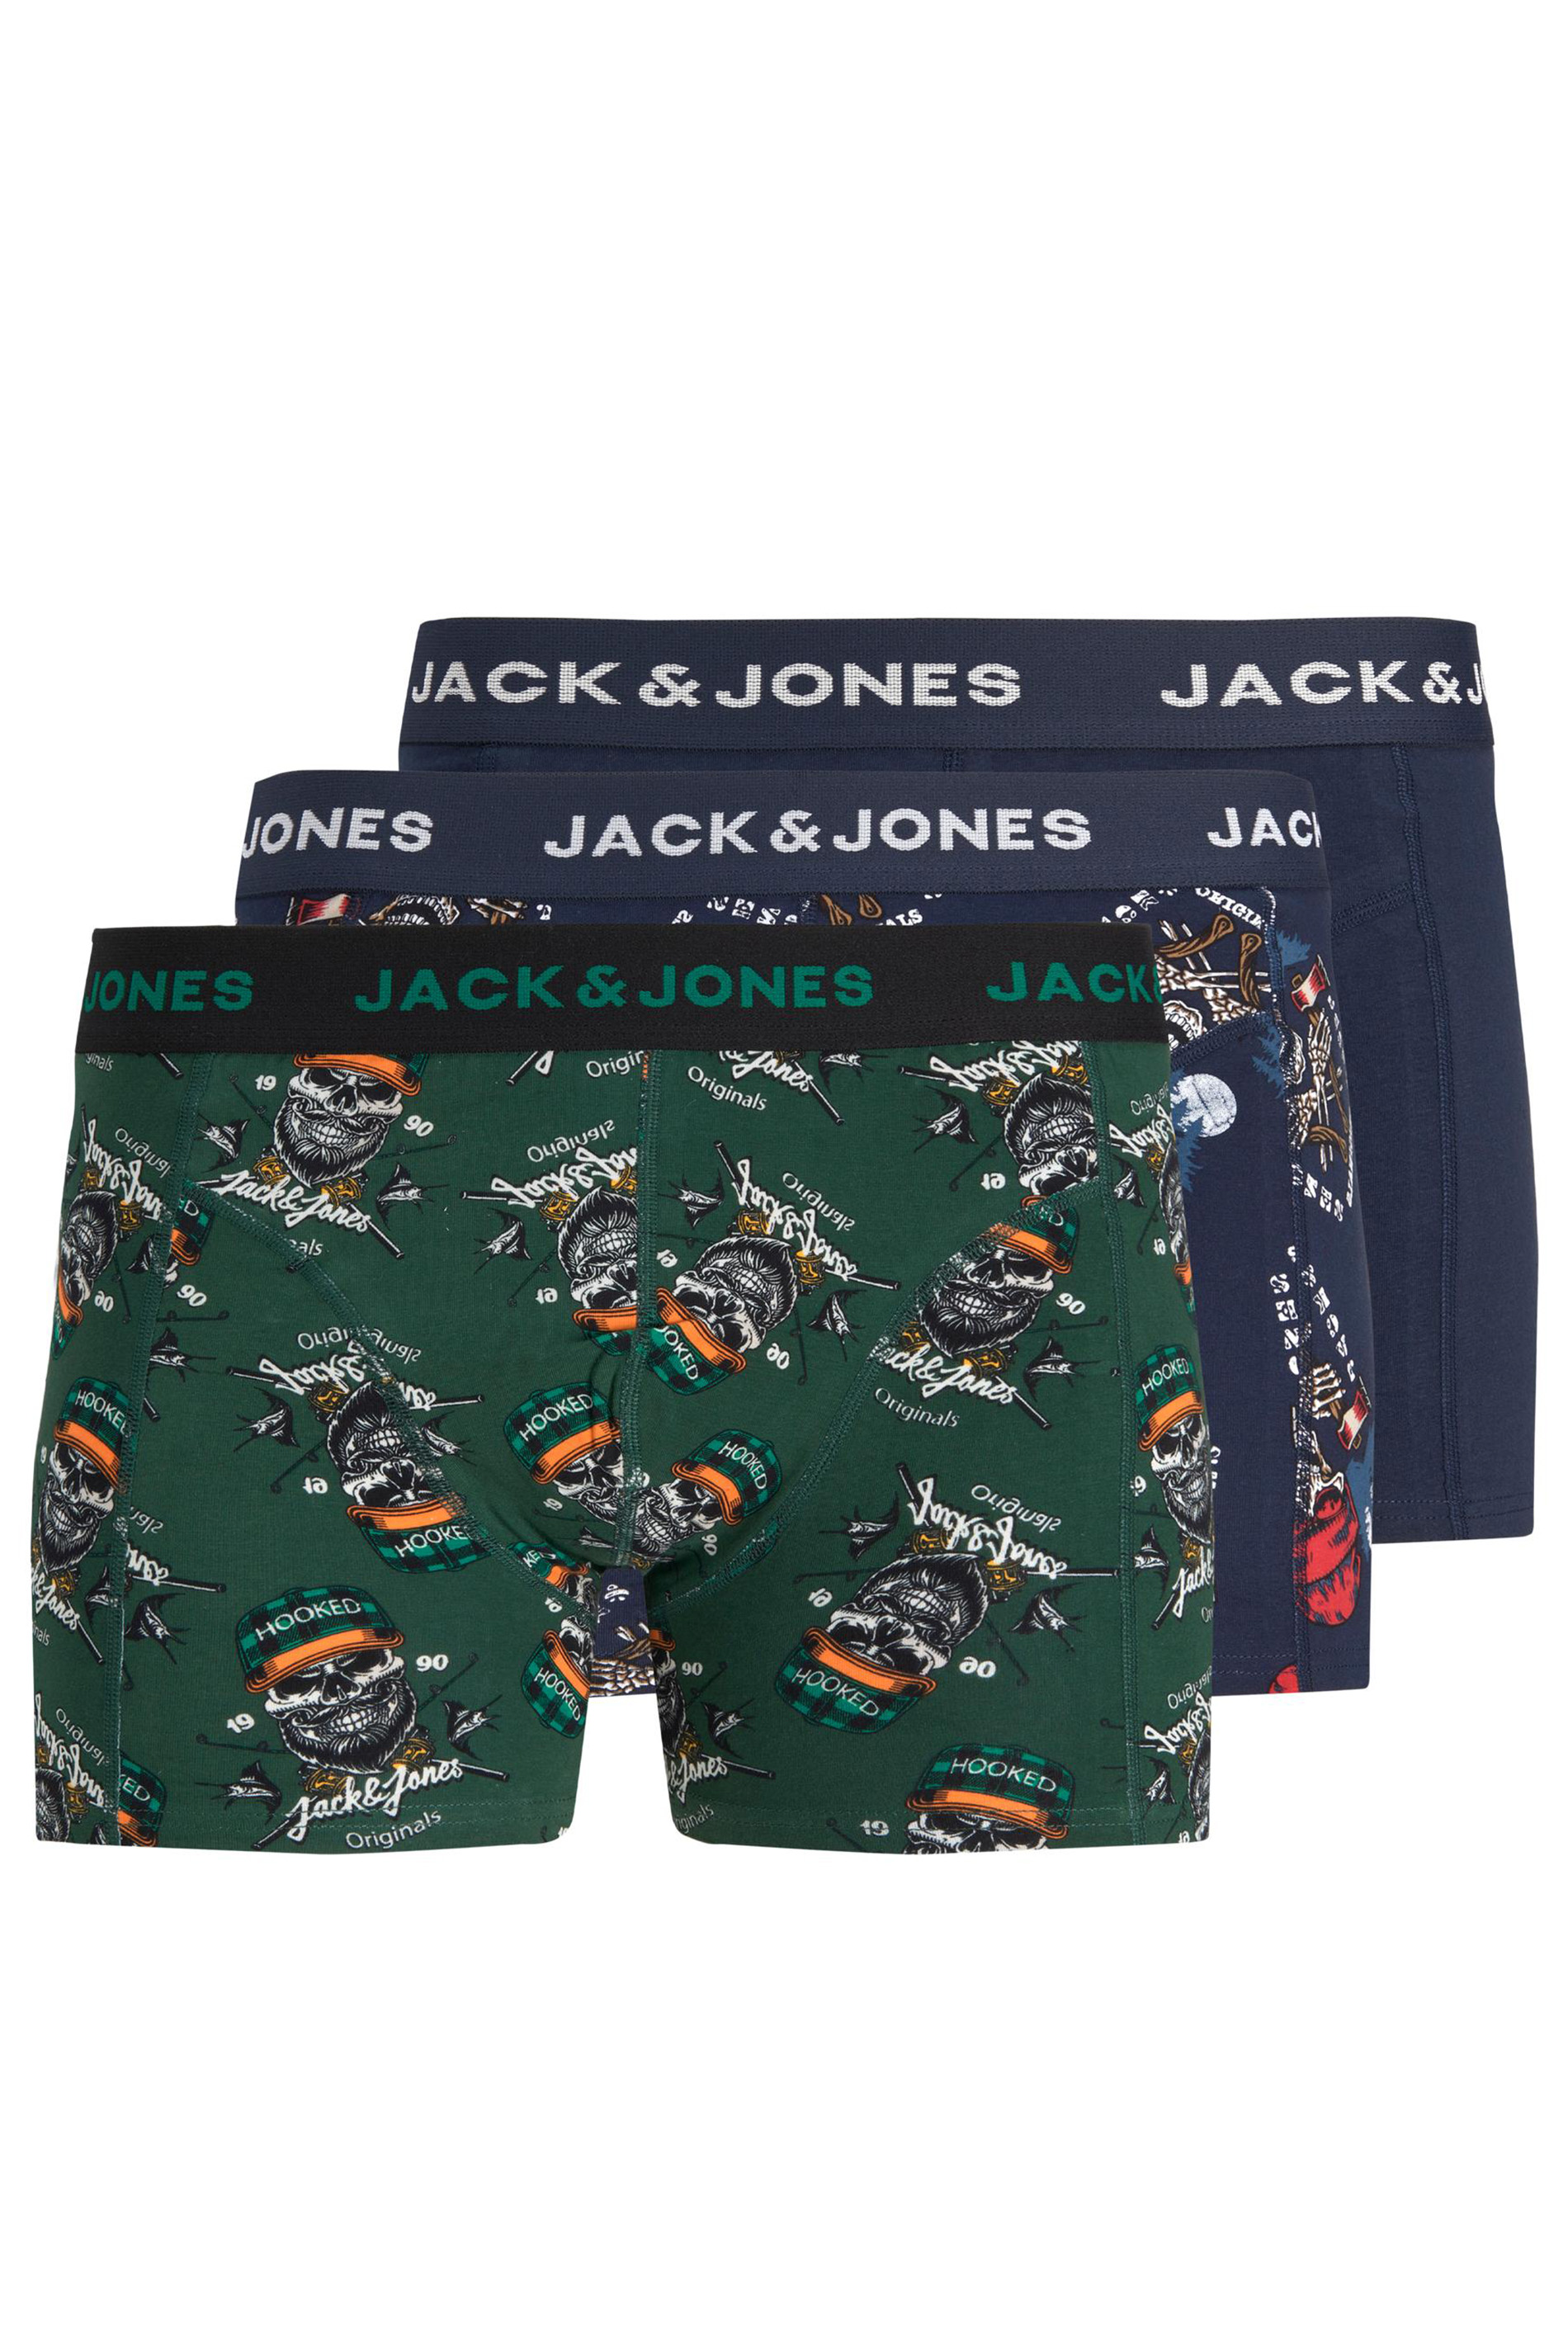 JACK & JONES Big & Tall 3 PACK Navy Blue & Green Skull Print Boxers | BadRhino 1